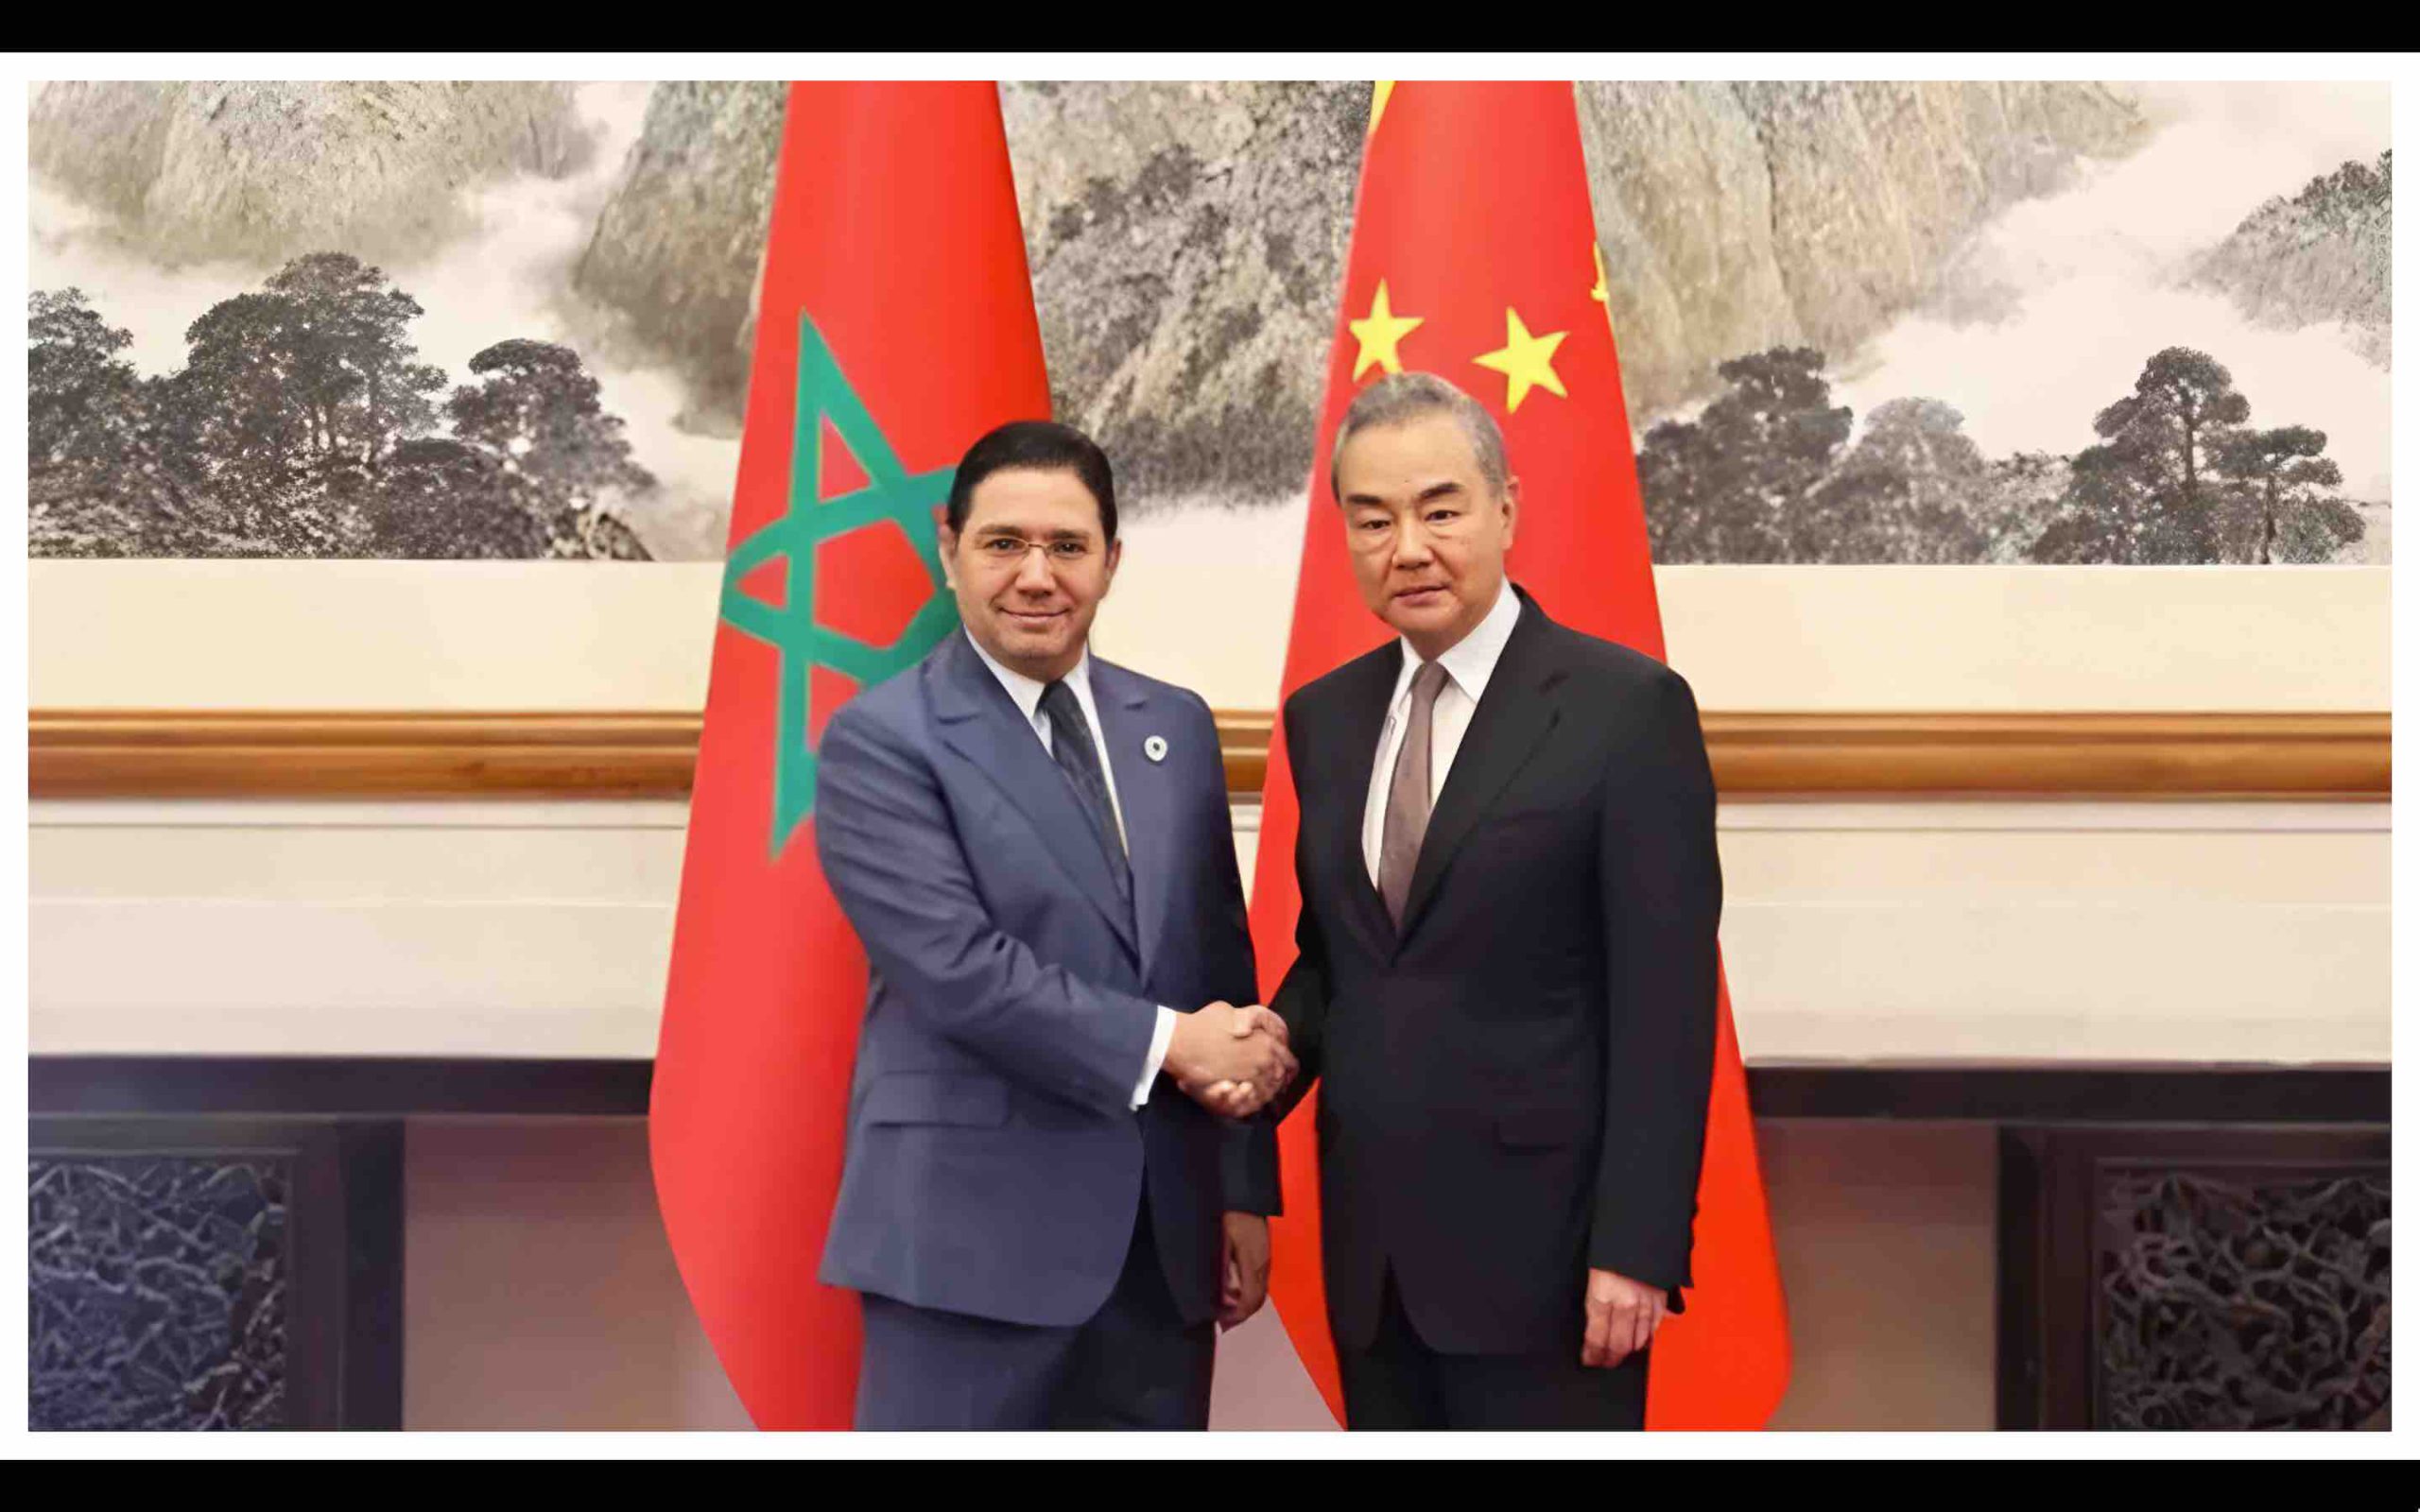 diplomatie Maroc Chine chef de la diplomatie marocaine Nasser Bourita chef de la diplomatie chinoise Wang Yi